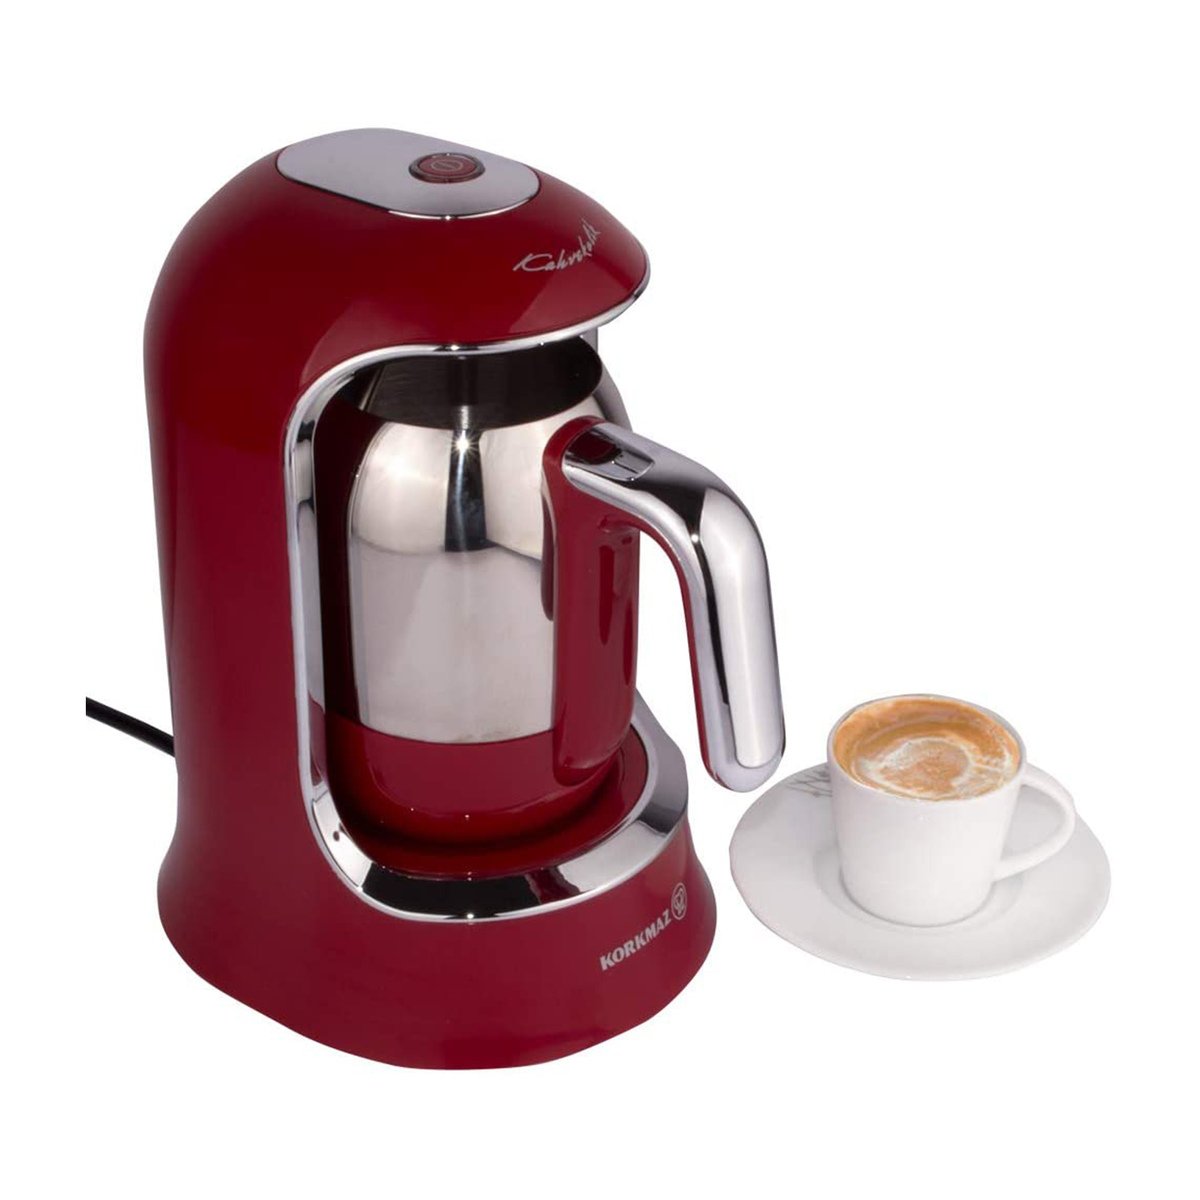 Korkmaz Turkish Coffee Maker A860-03